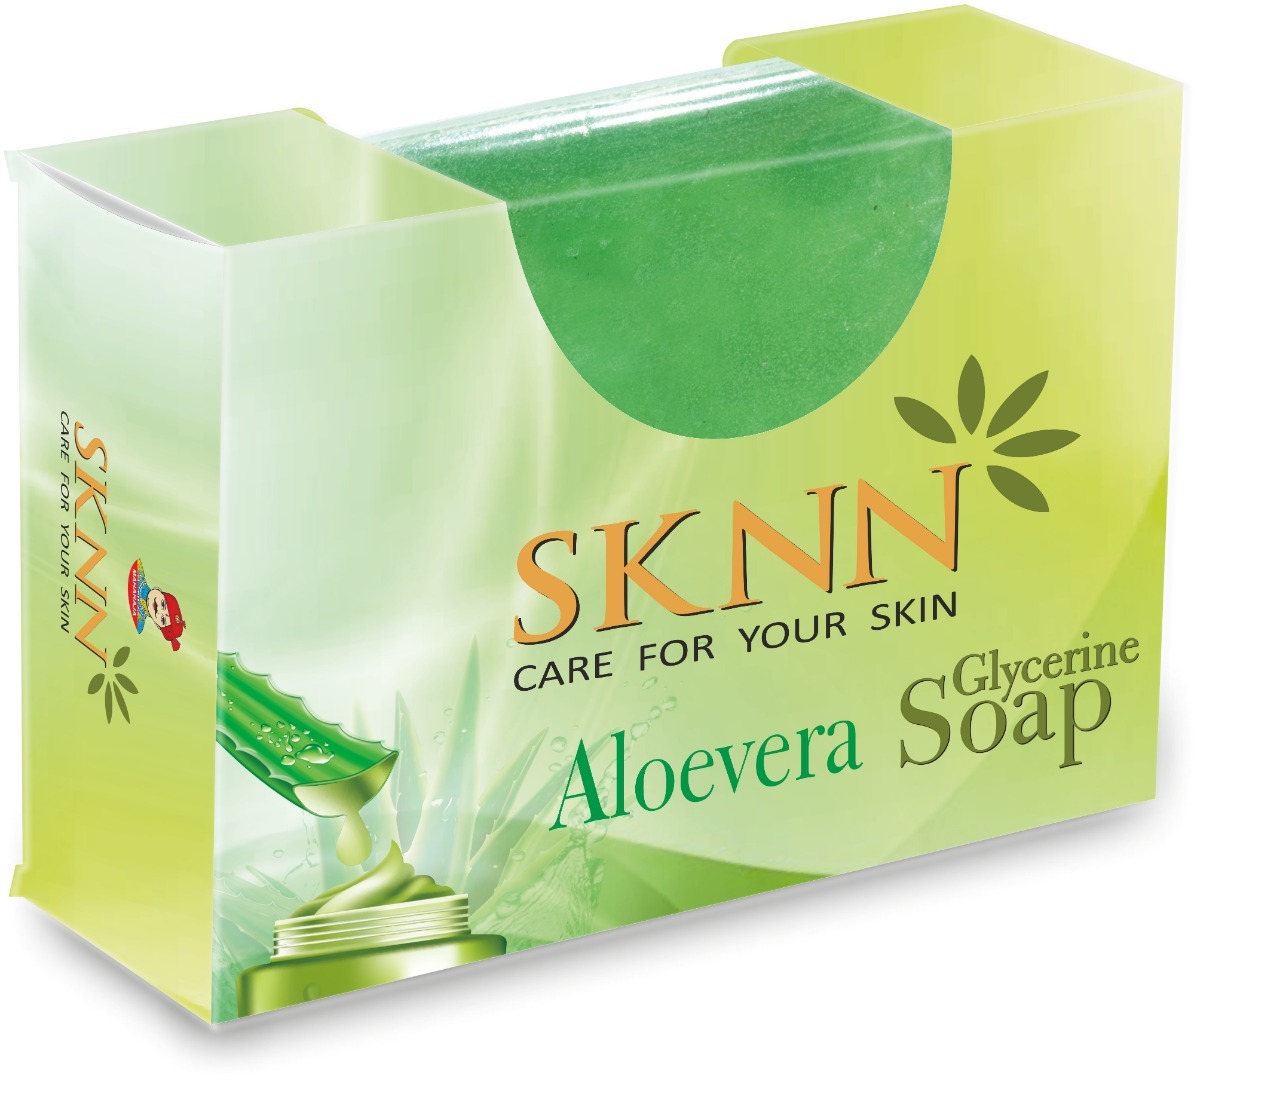 Sknn Aloevera Glycerine Soap